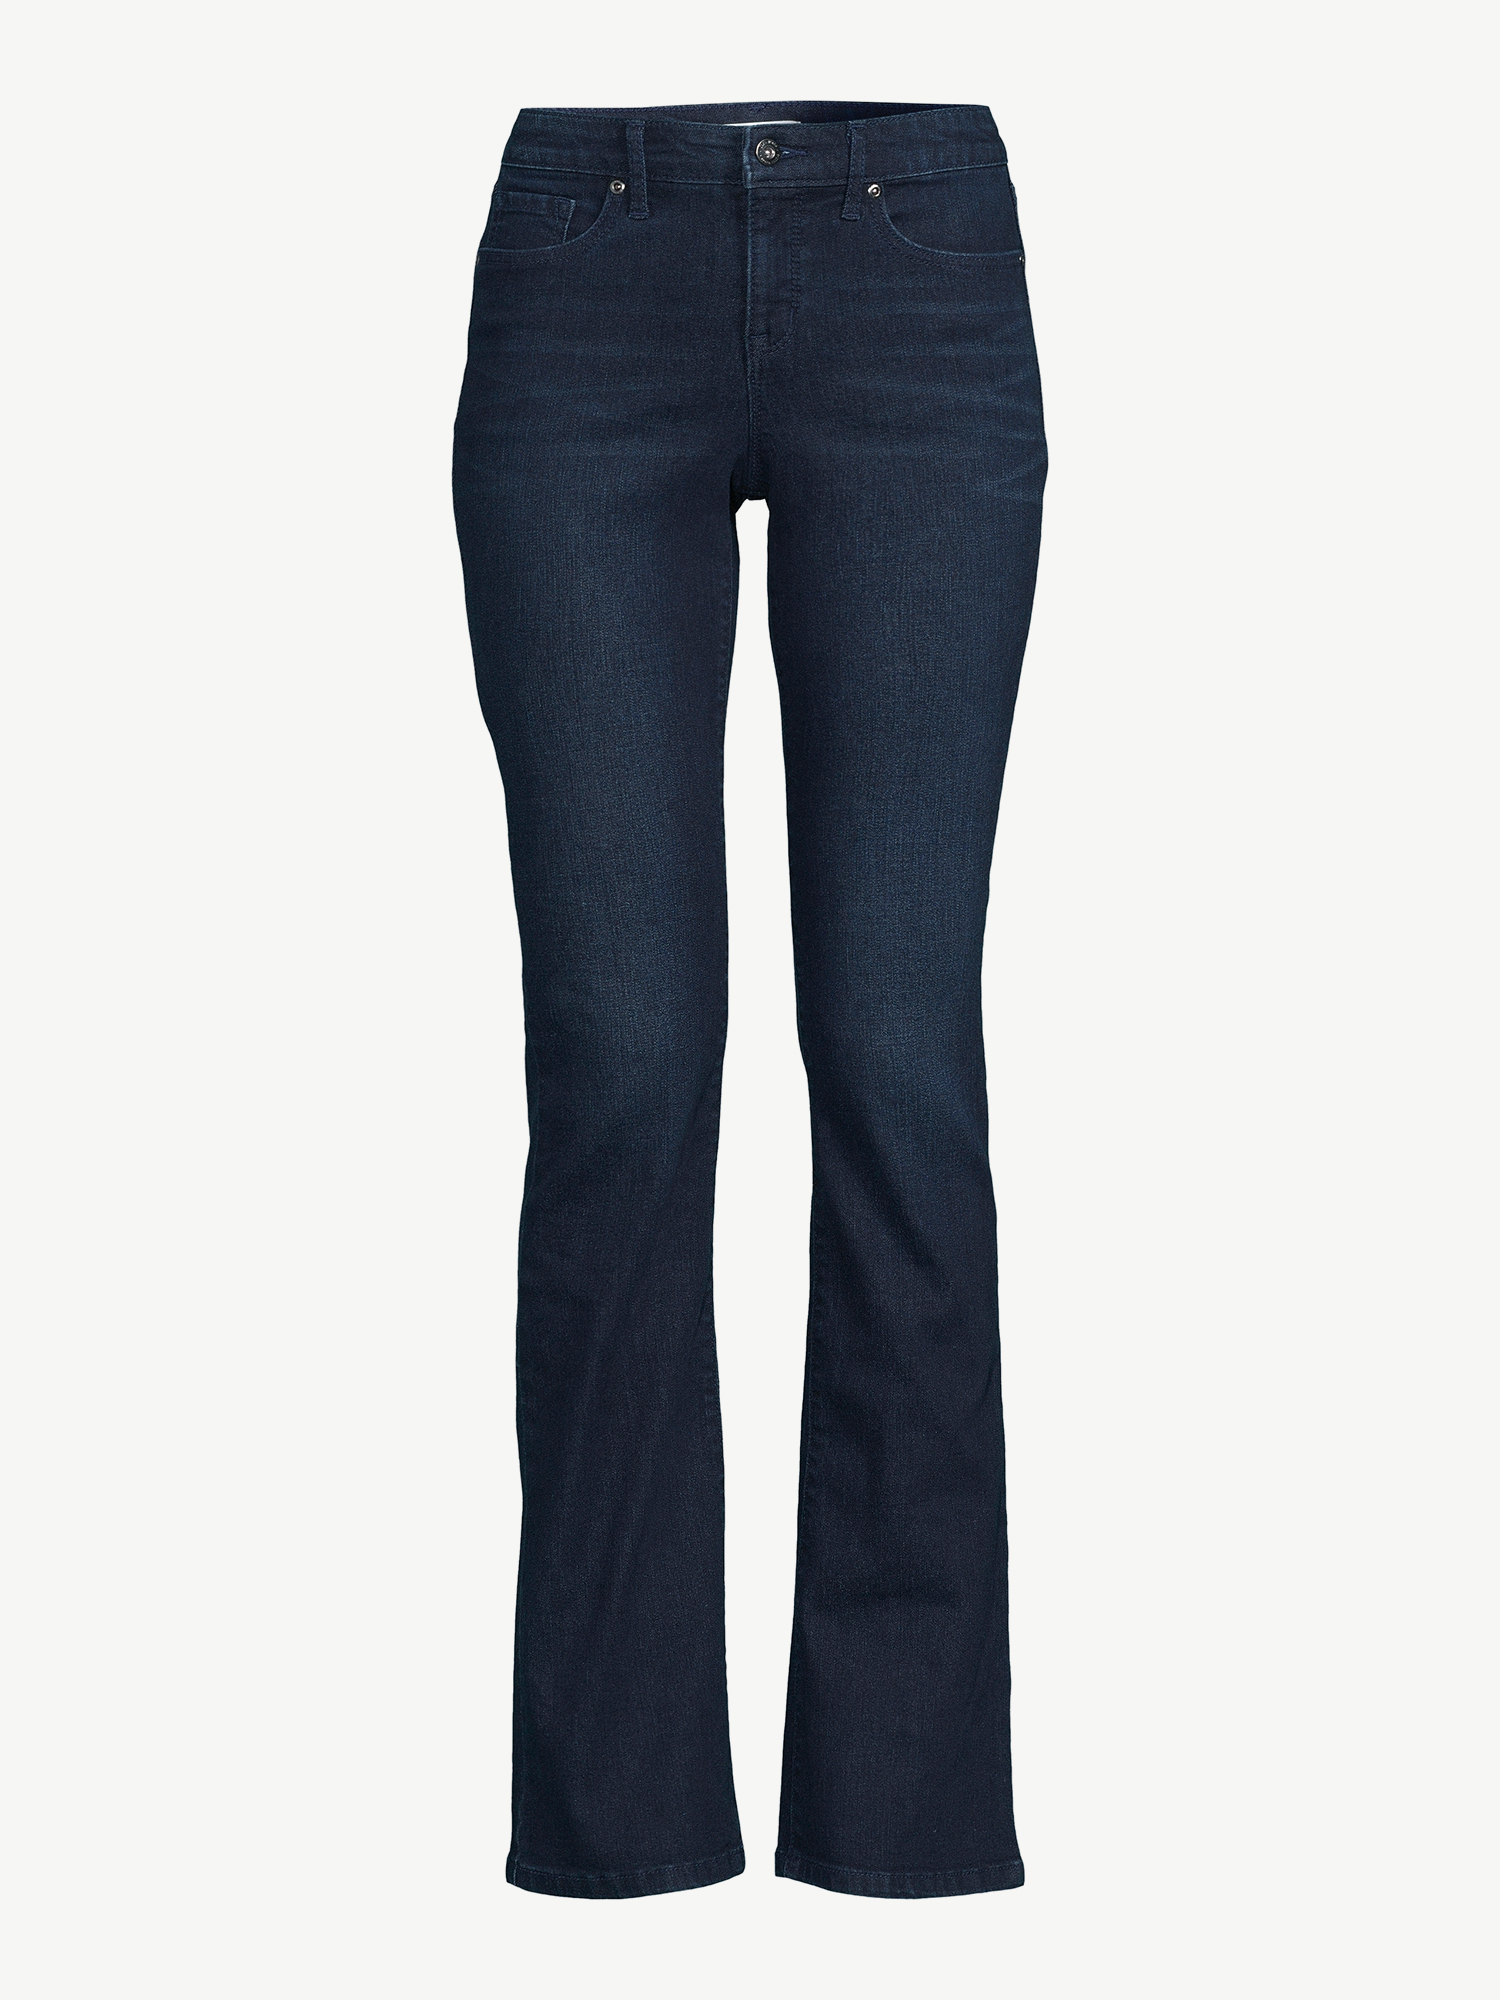 Sofia Jeans Women's Marisol Bootcut Mid Rise Jeans - Walmart.com